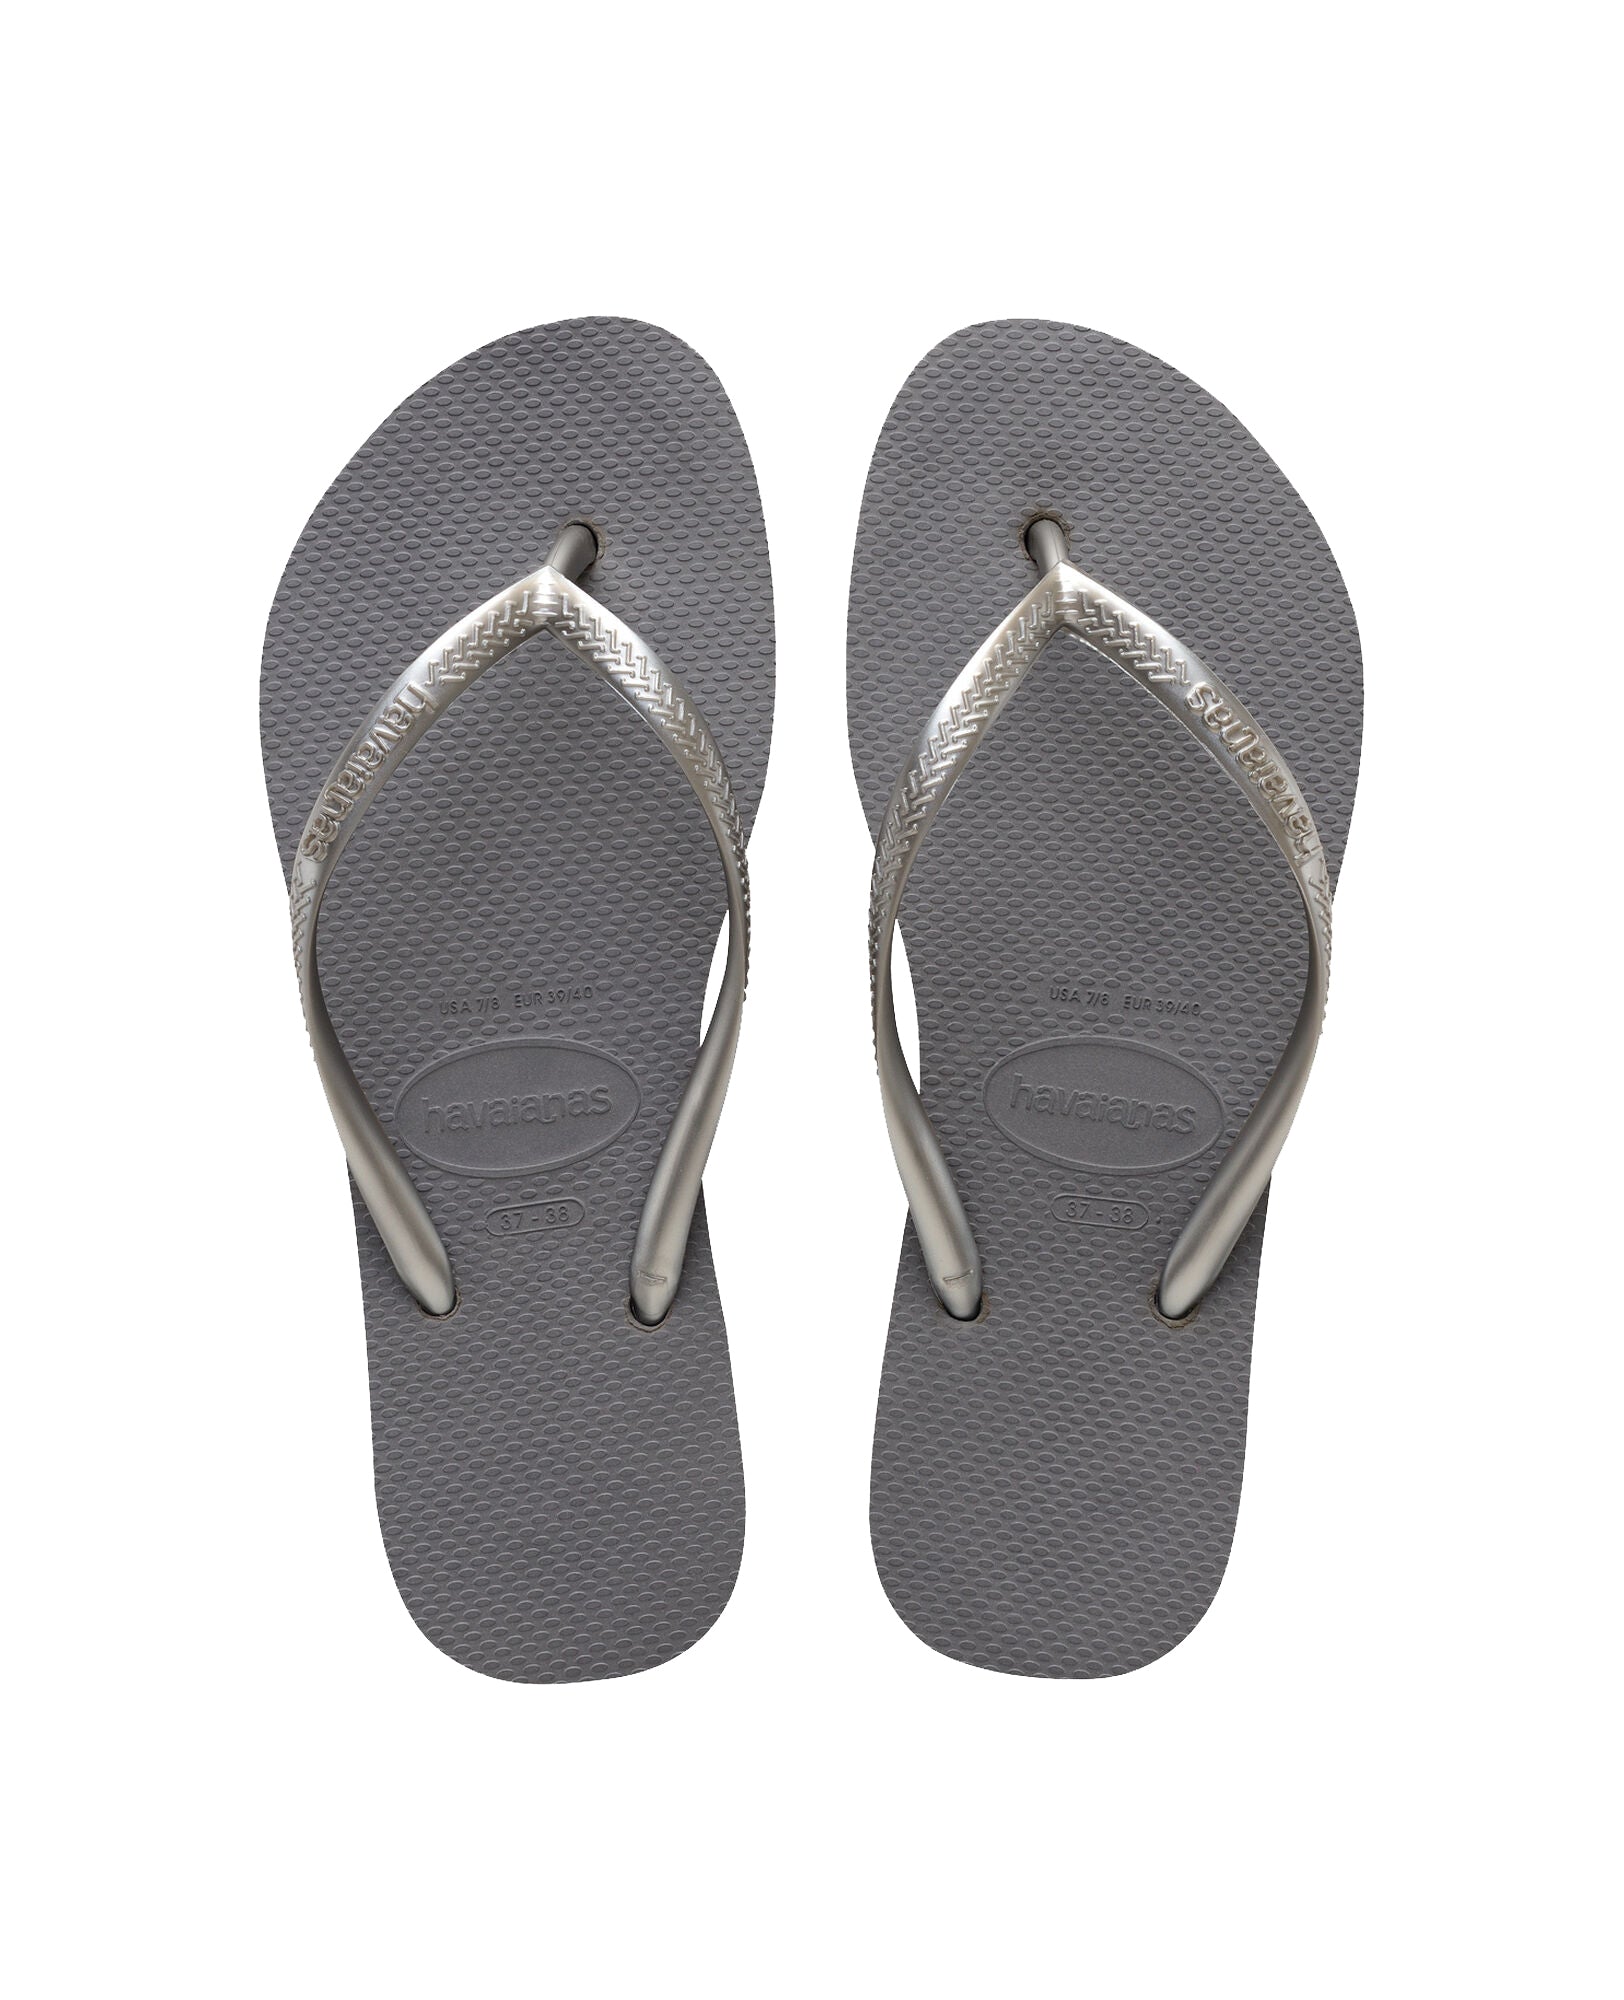 Havaianas Slim Flatform Womens Sandal 5178-Steel Grey 7